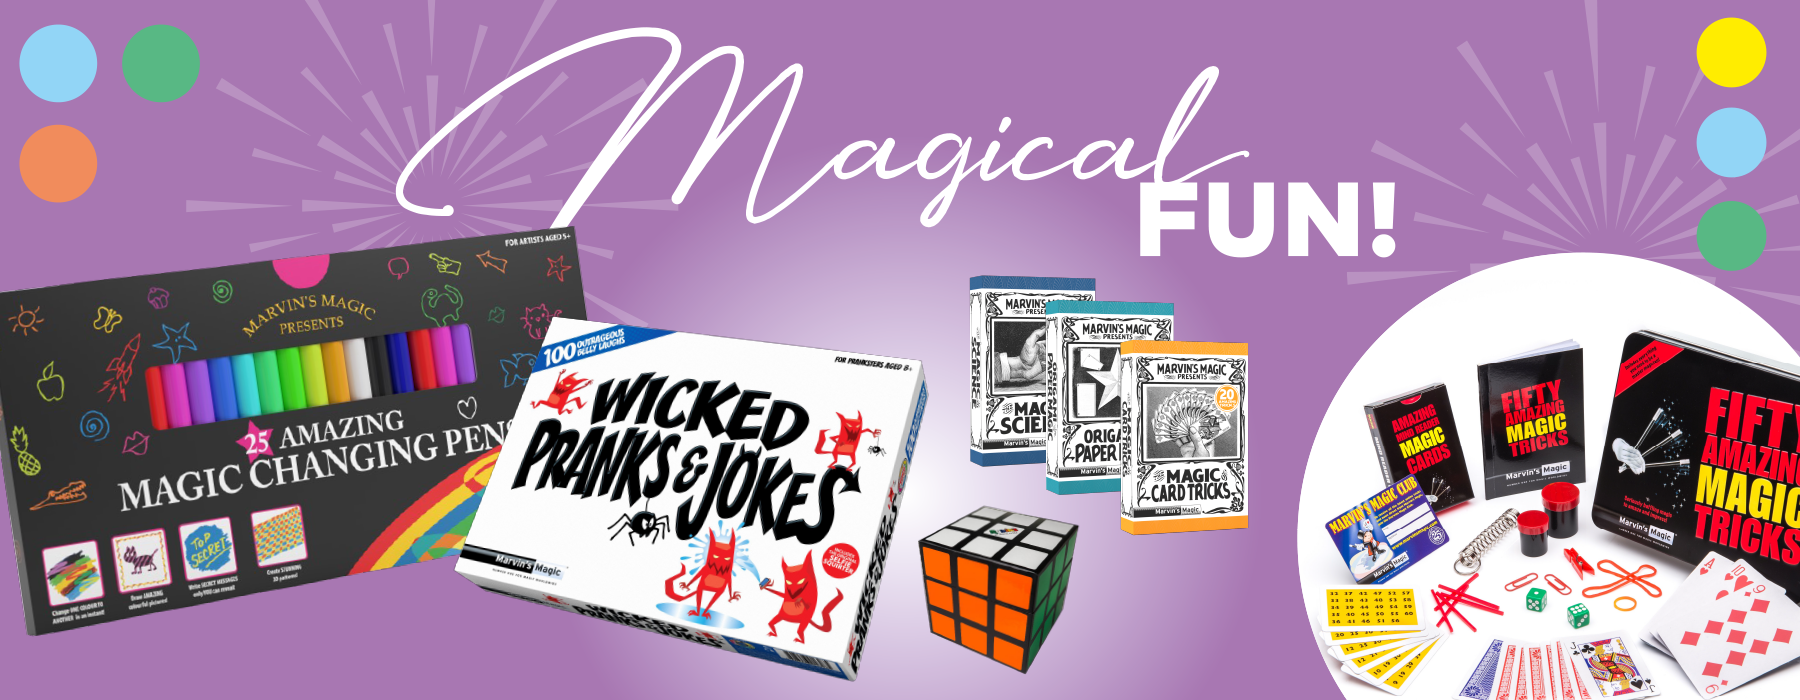 Magical fun, magic tricks, jokes, pranks, magicians, magic pens